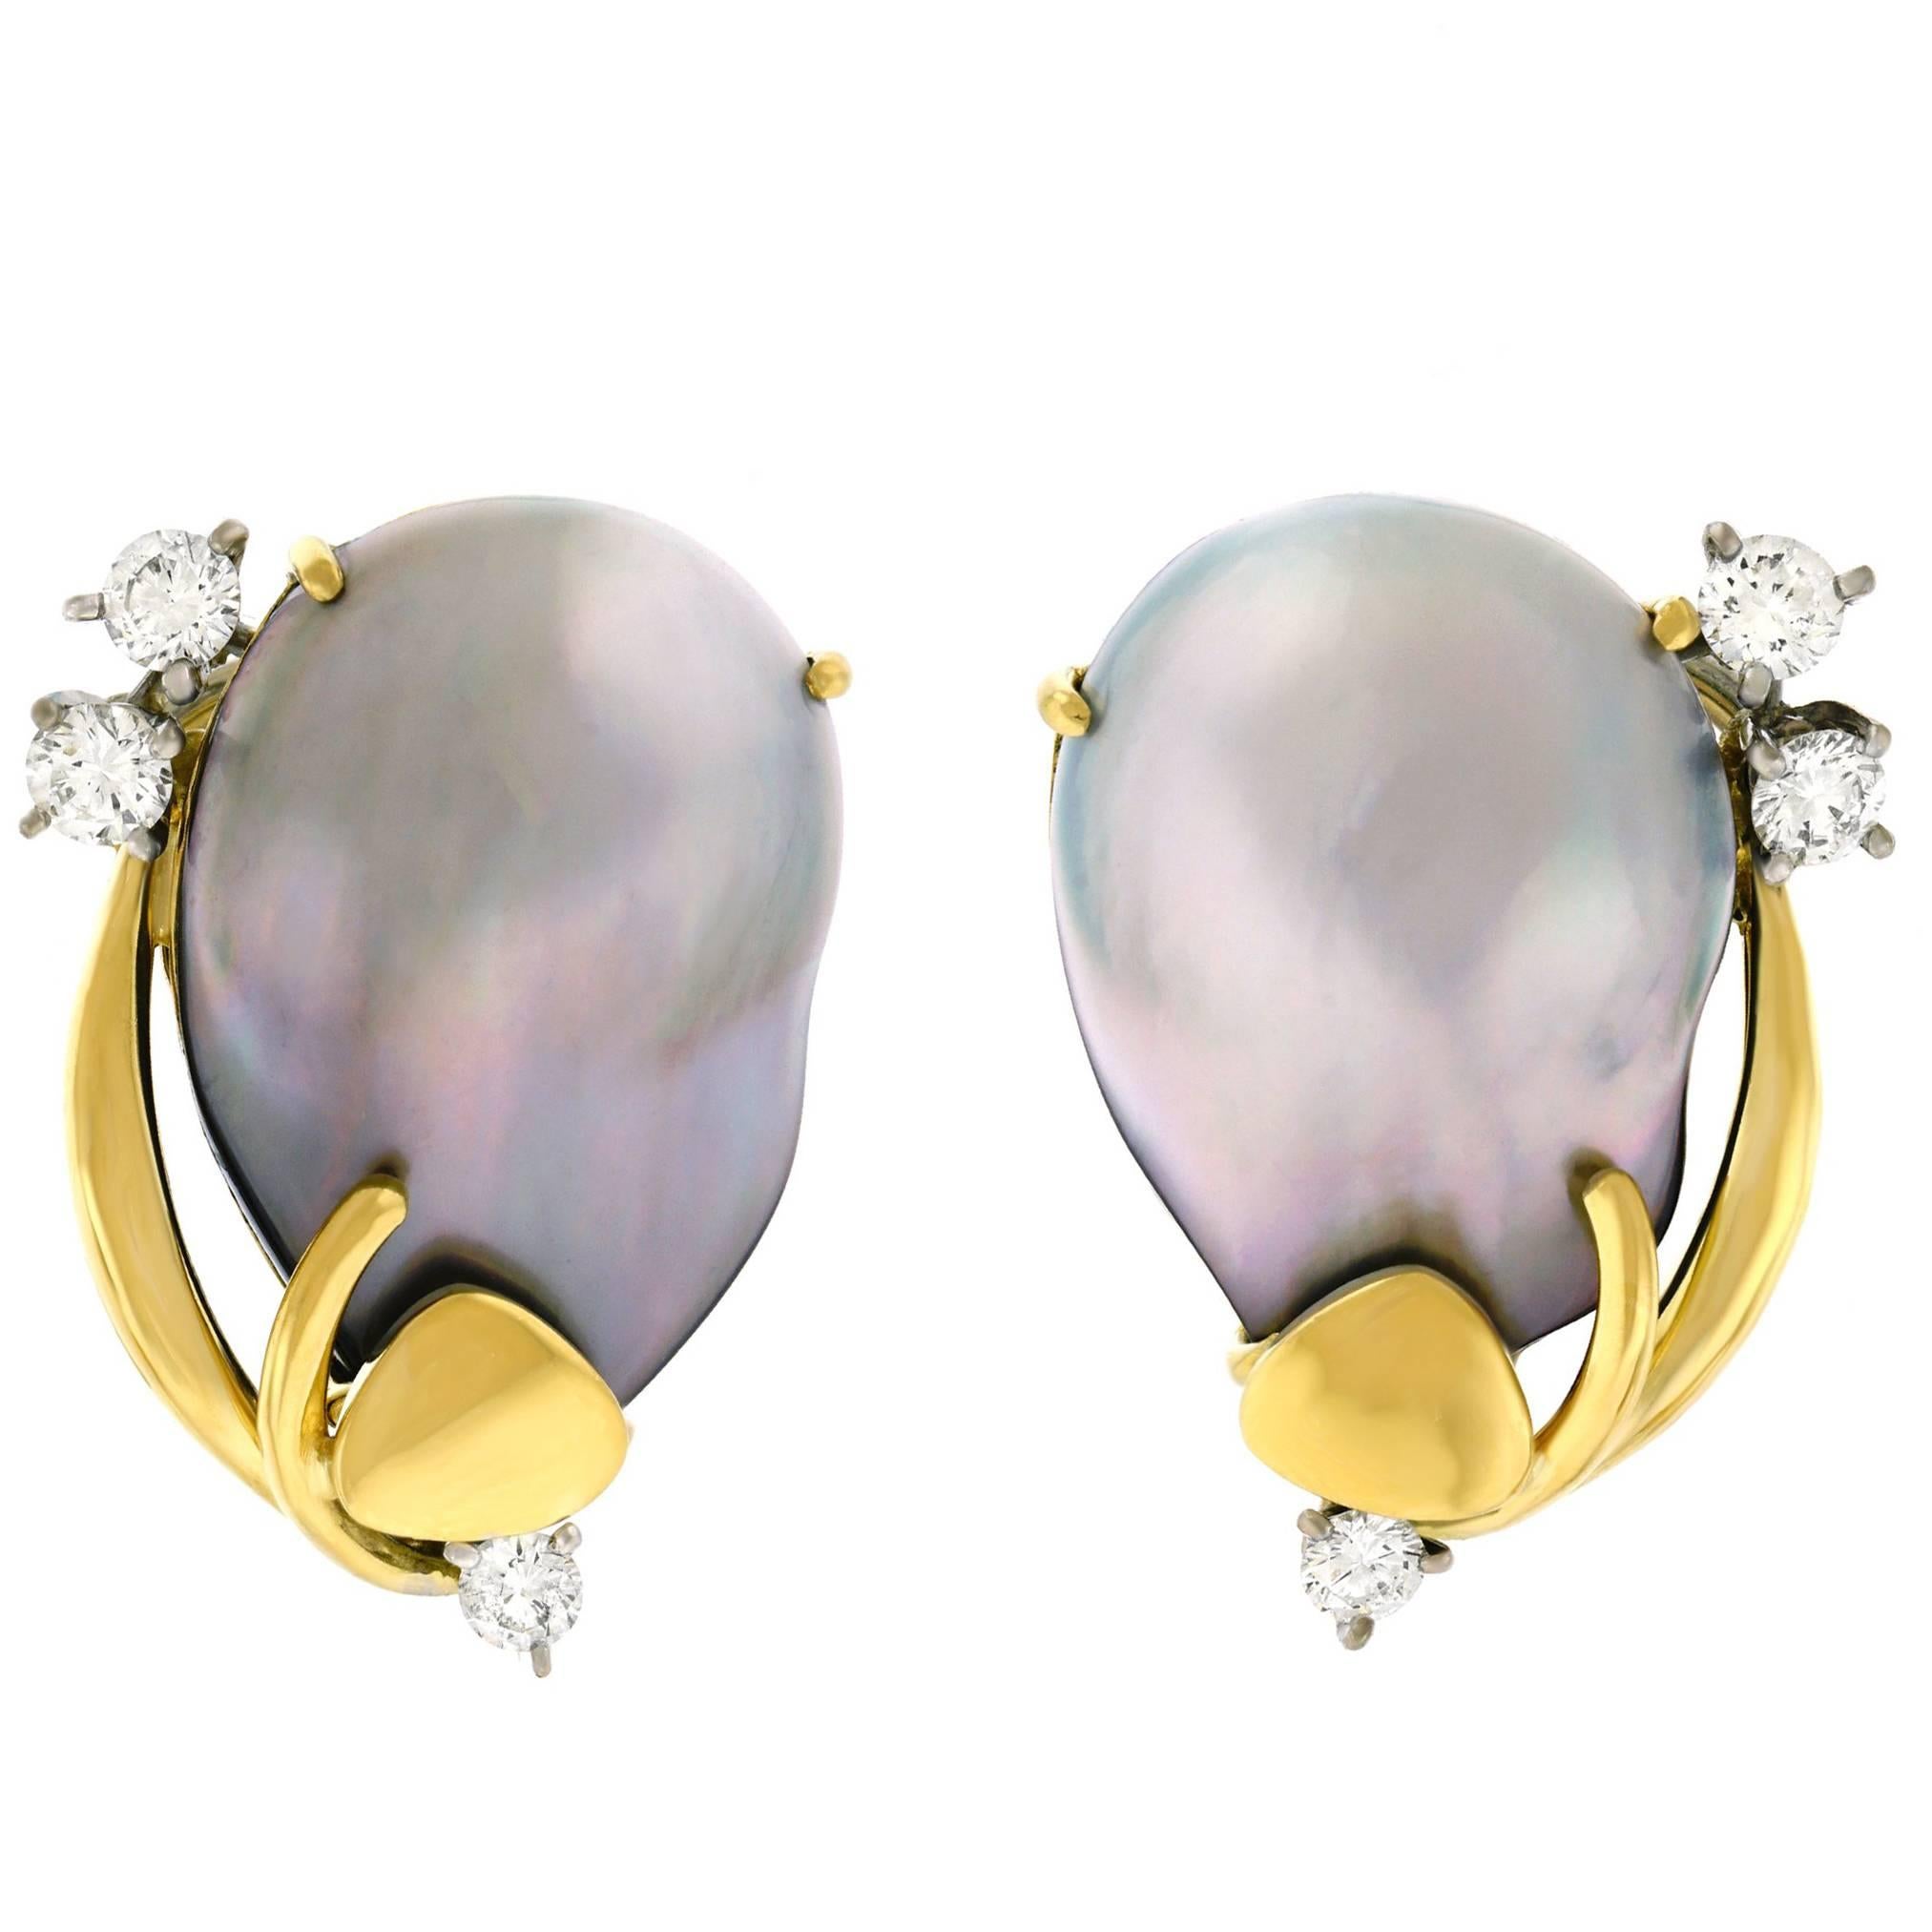 Emil Meister Modernist Pearl and Diamond Set Gold Earrings